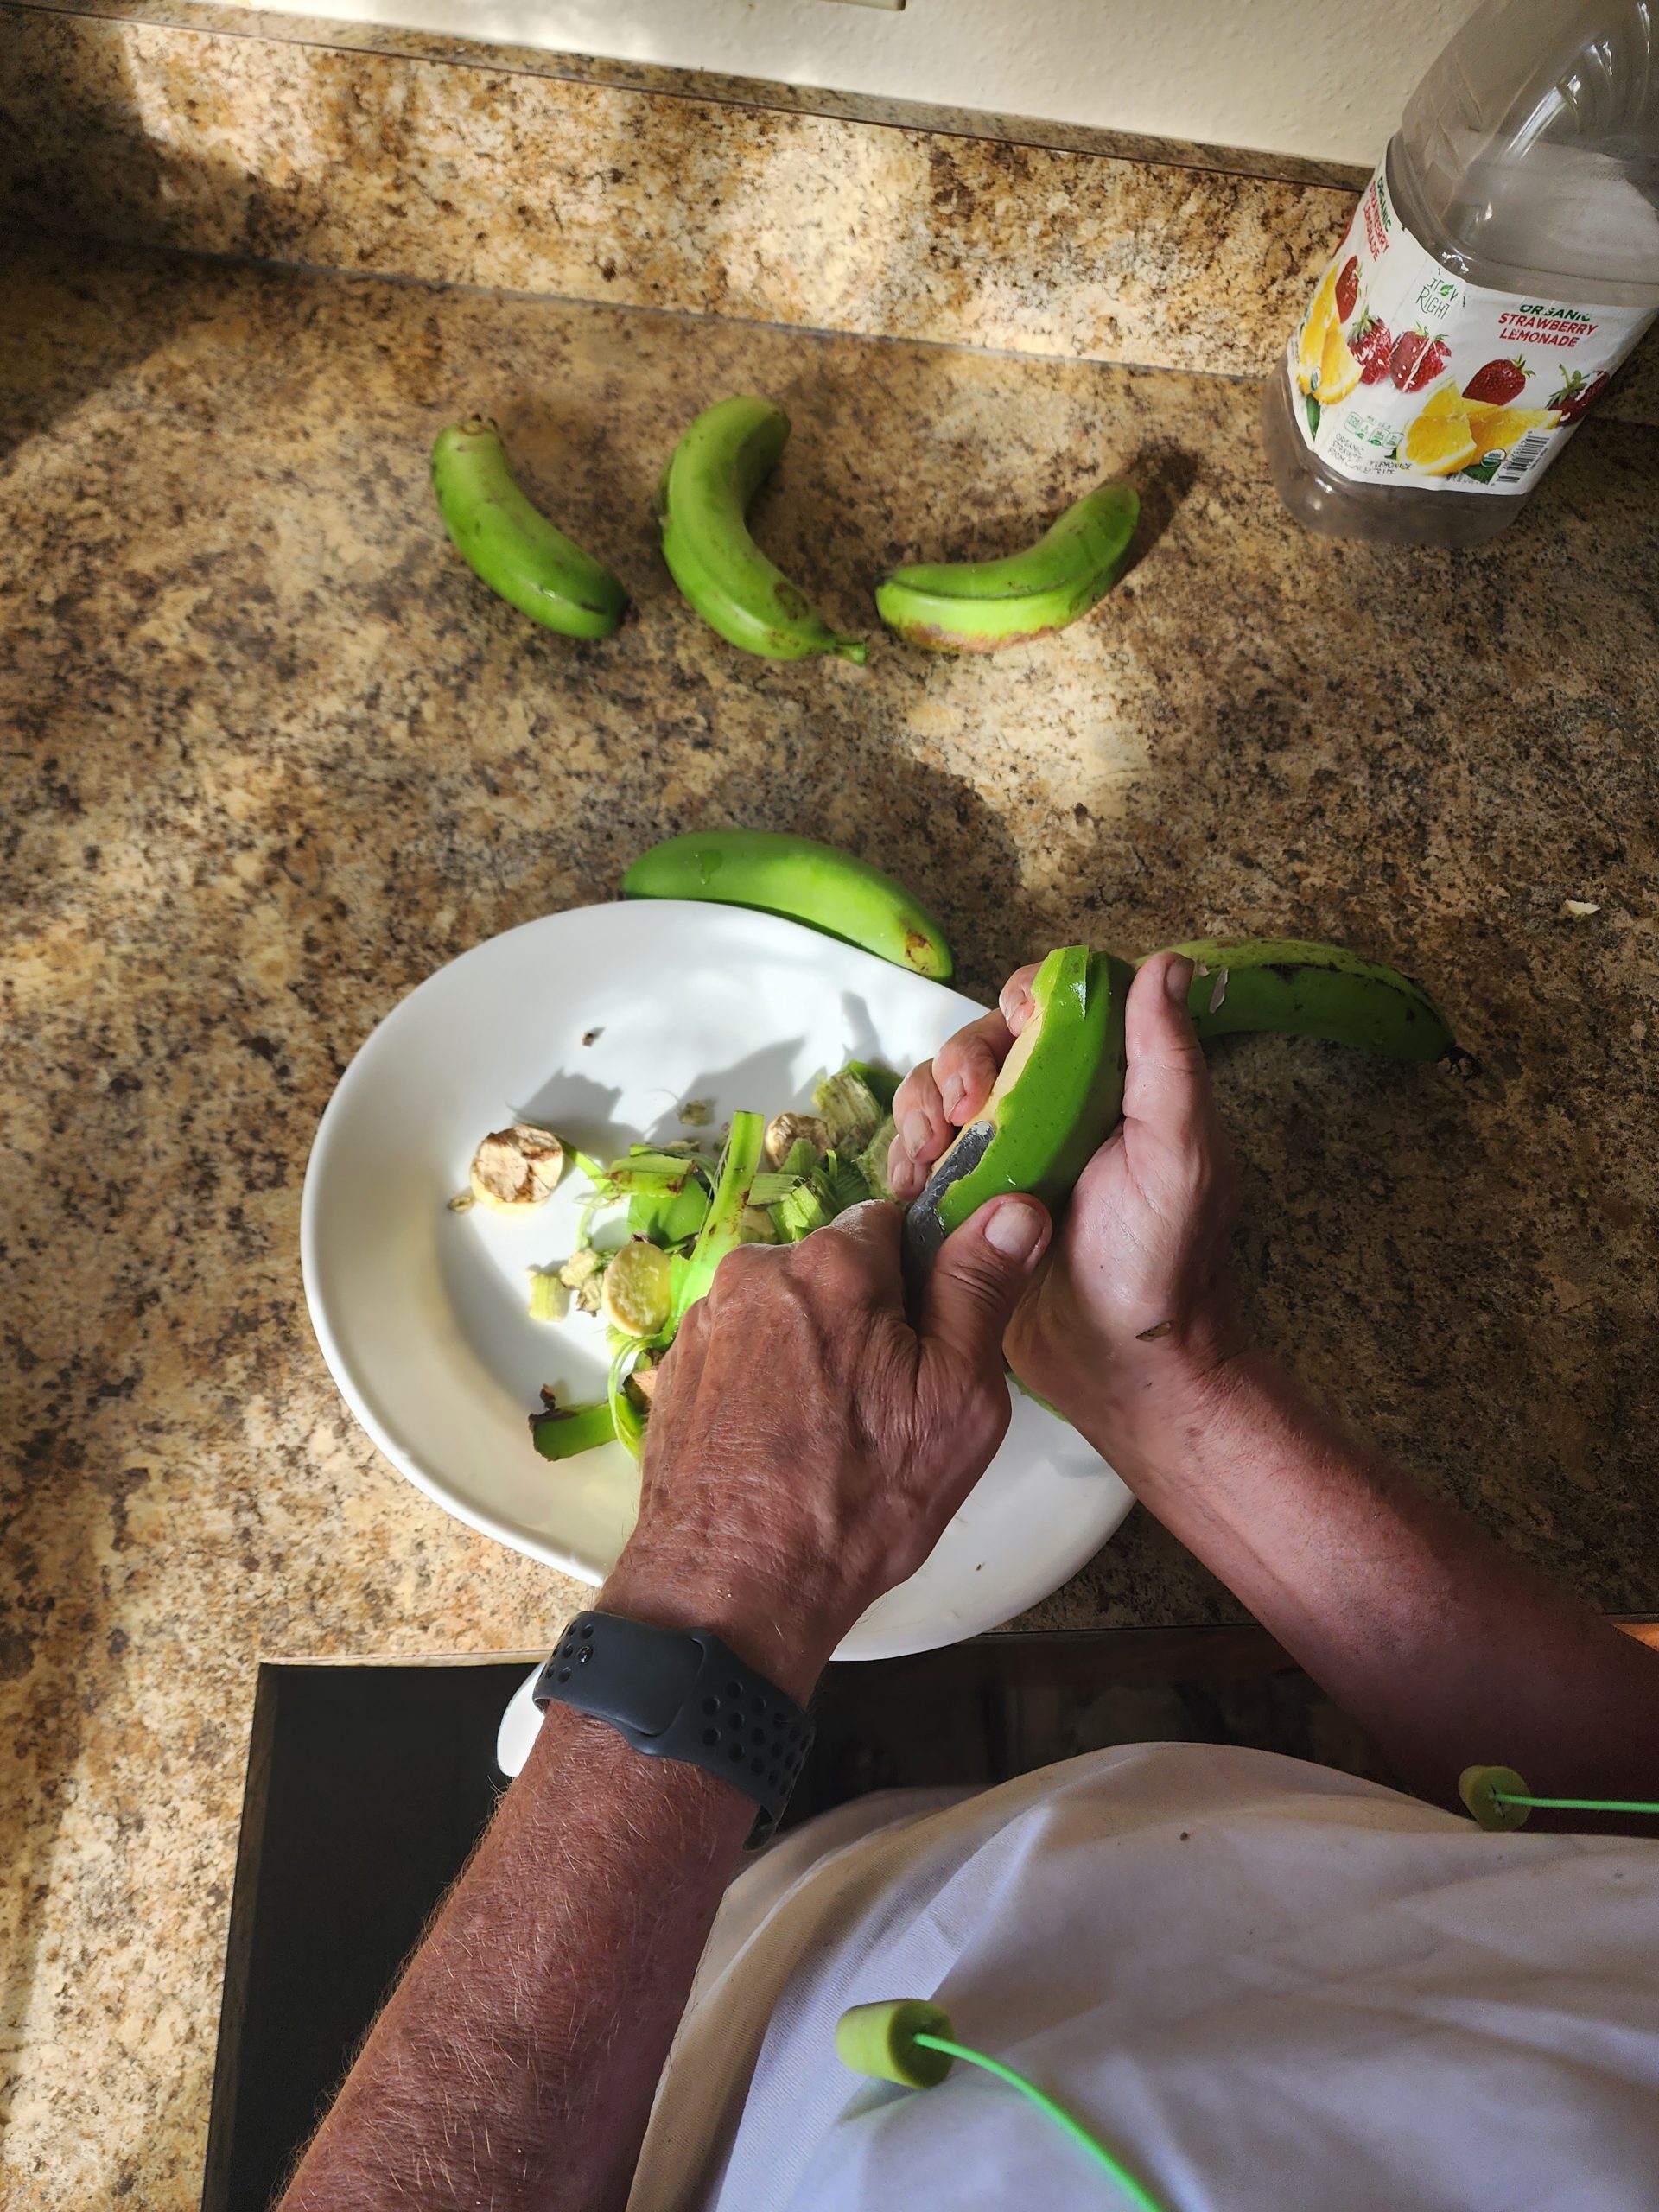 peeling green bananas